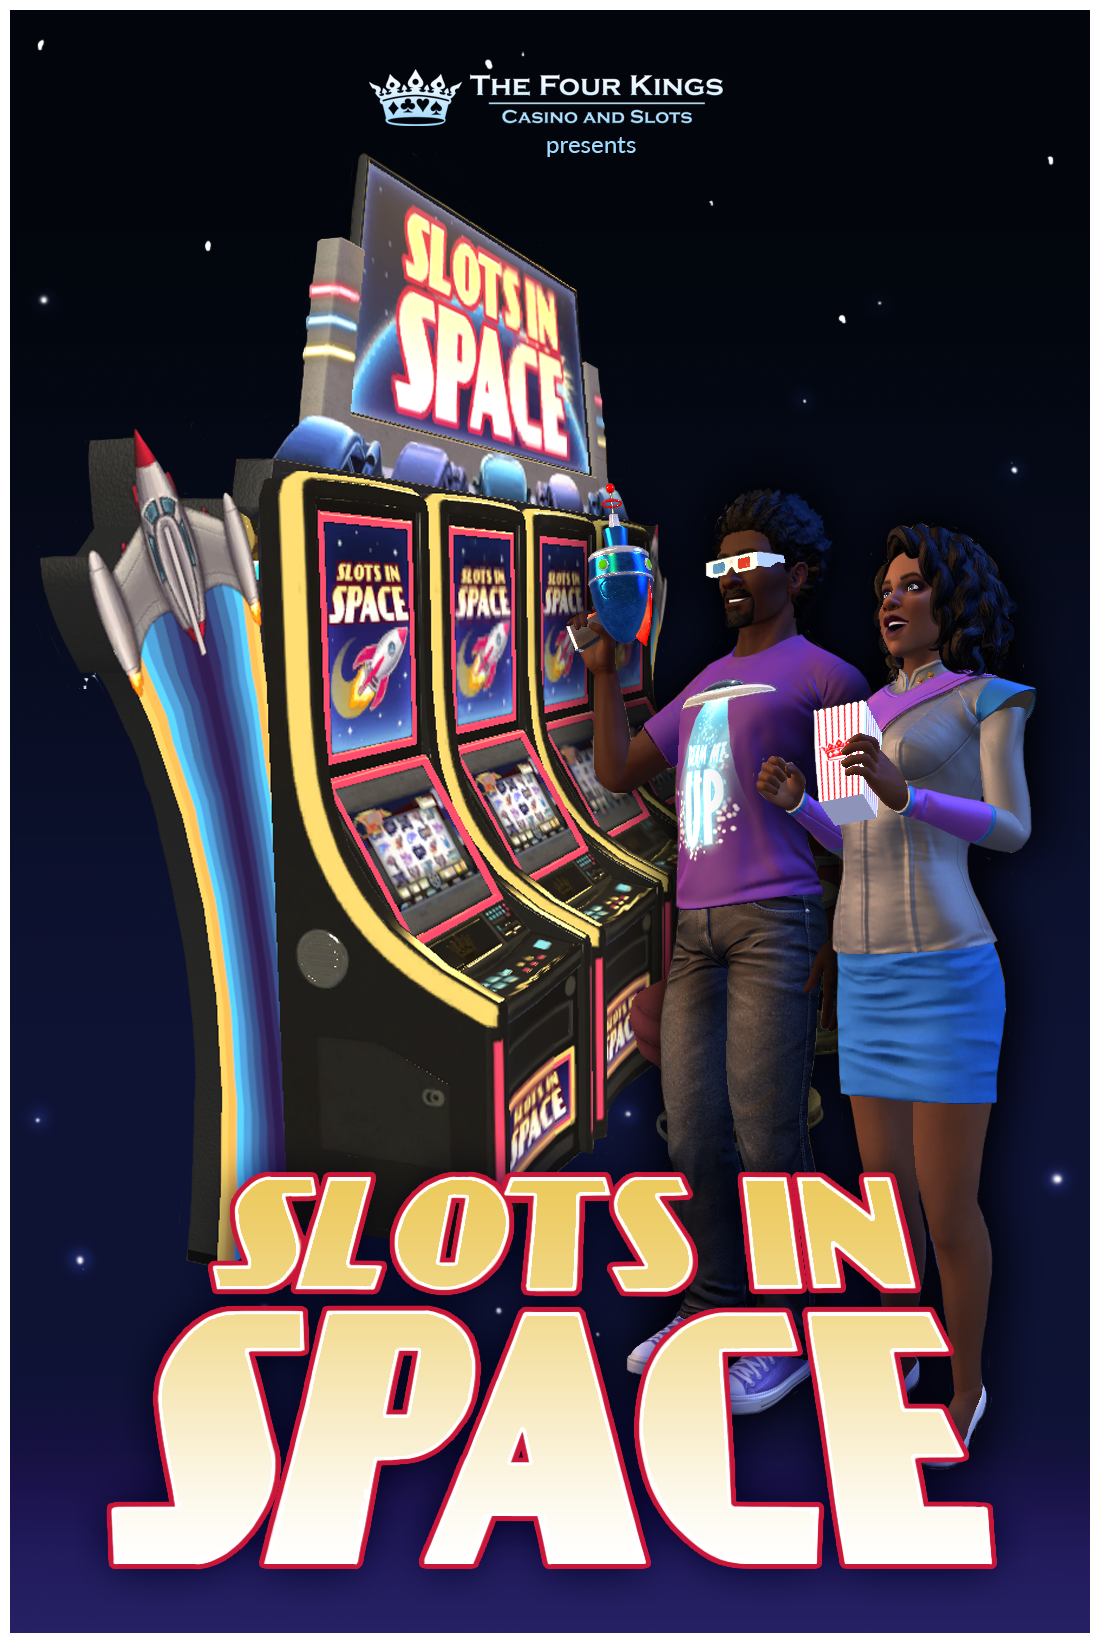 Casino slot machines big wins video bonus